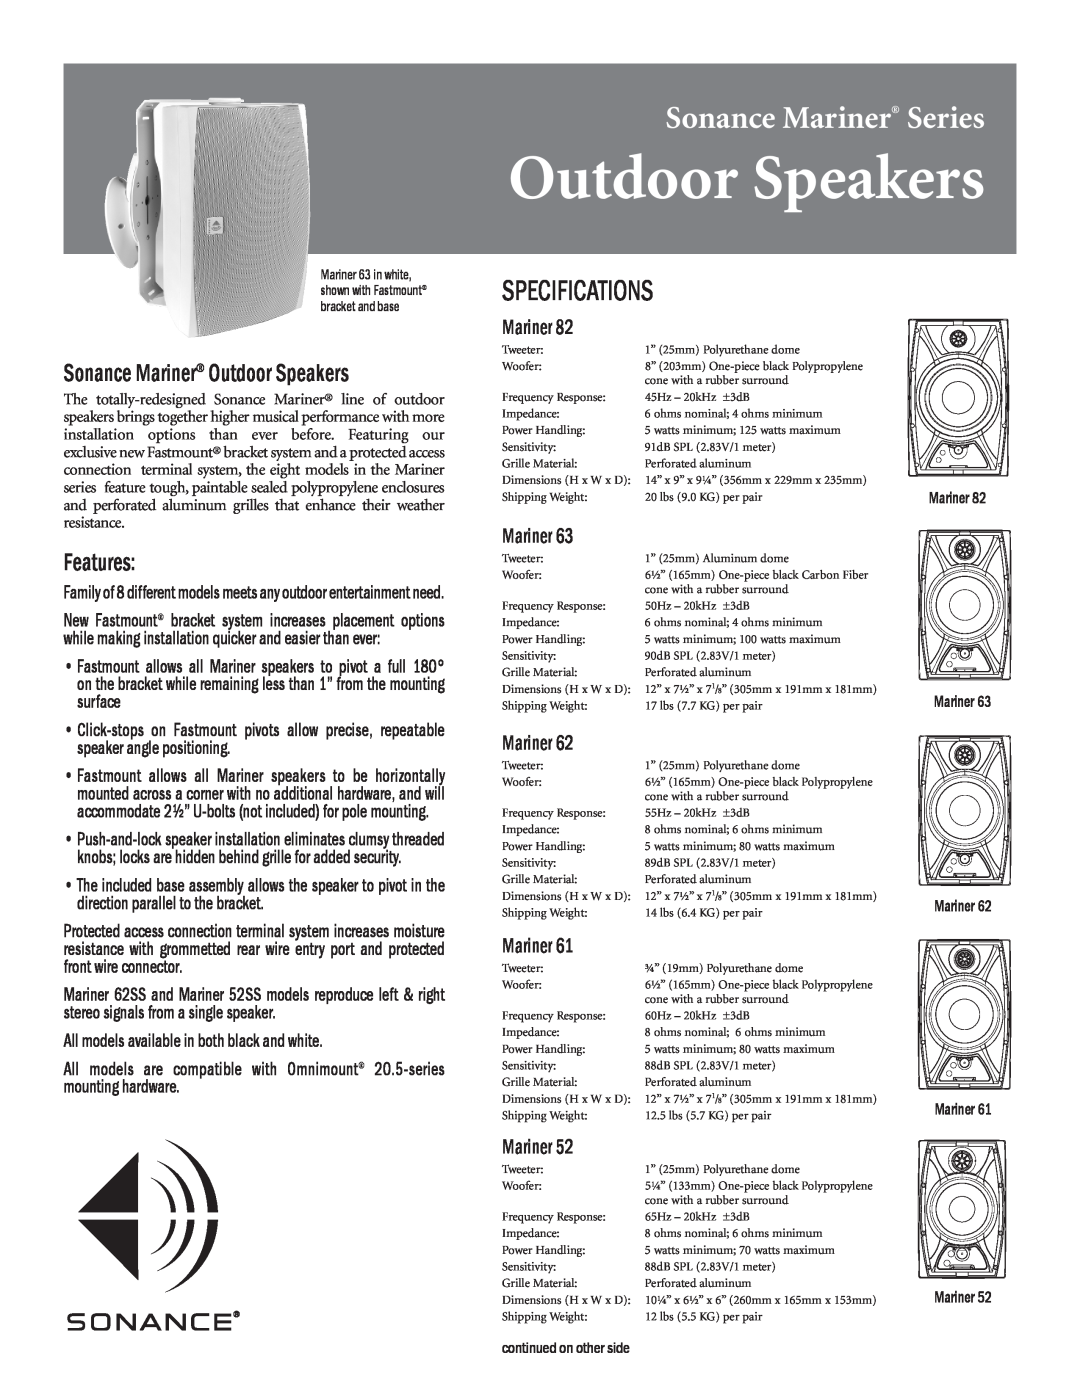 Sonance 62, 82, 61, 52 specifications Sonance Mariner Series, Specifications, Sonance Mariner Outdoor Speakers, Features 